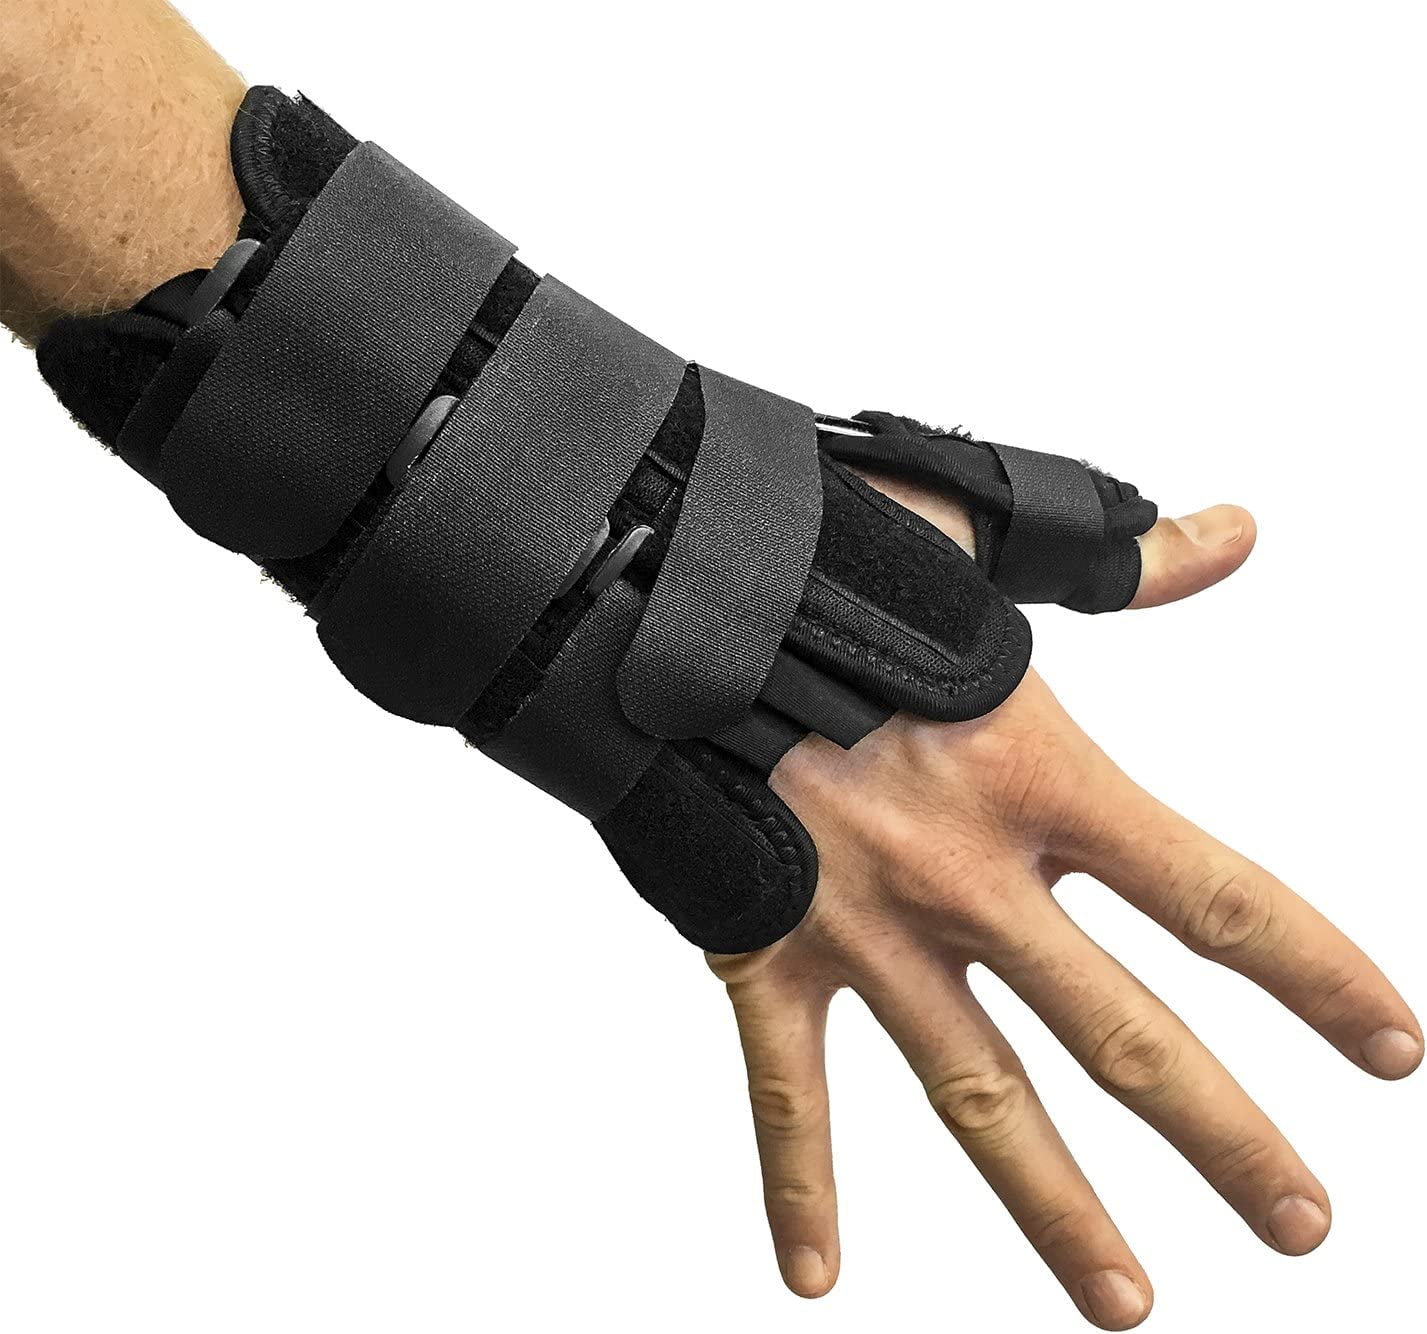 VELPEAU Wrist Brace with Thumb Spica Splint for De Quervain's  Tenosynovitis, Carpal Tunnel Pain, Stabilizer for Tendonitis, Arthritis,  Sprains 